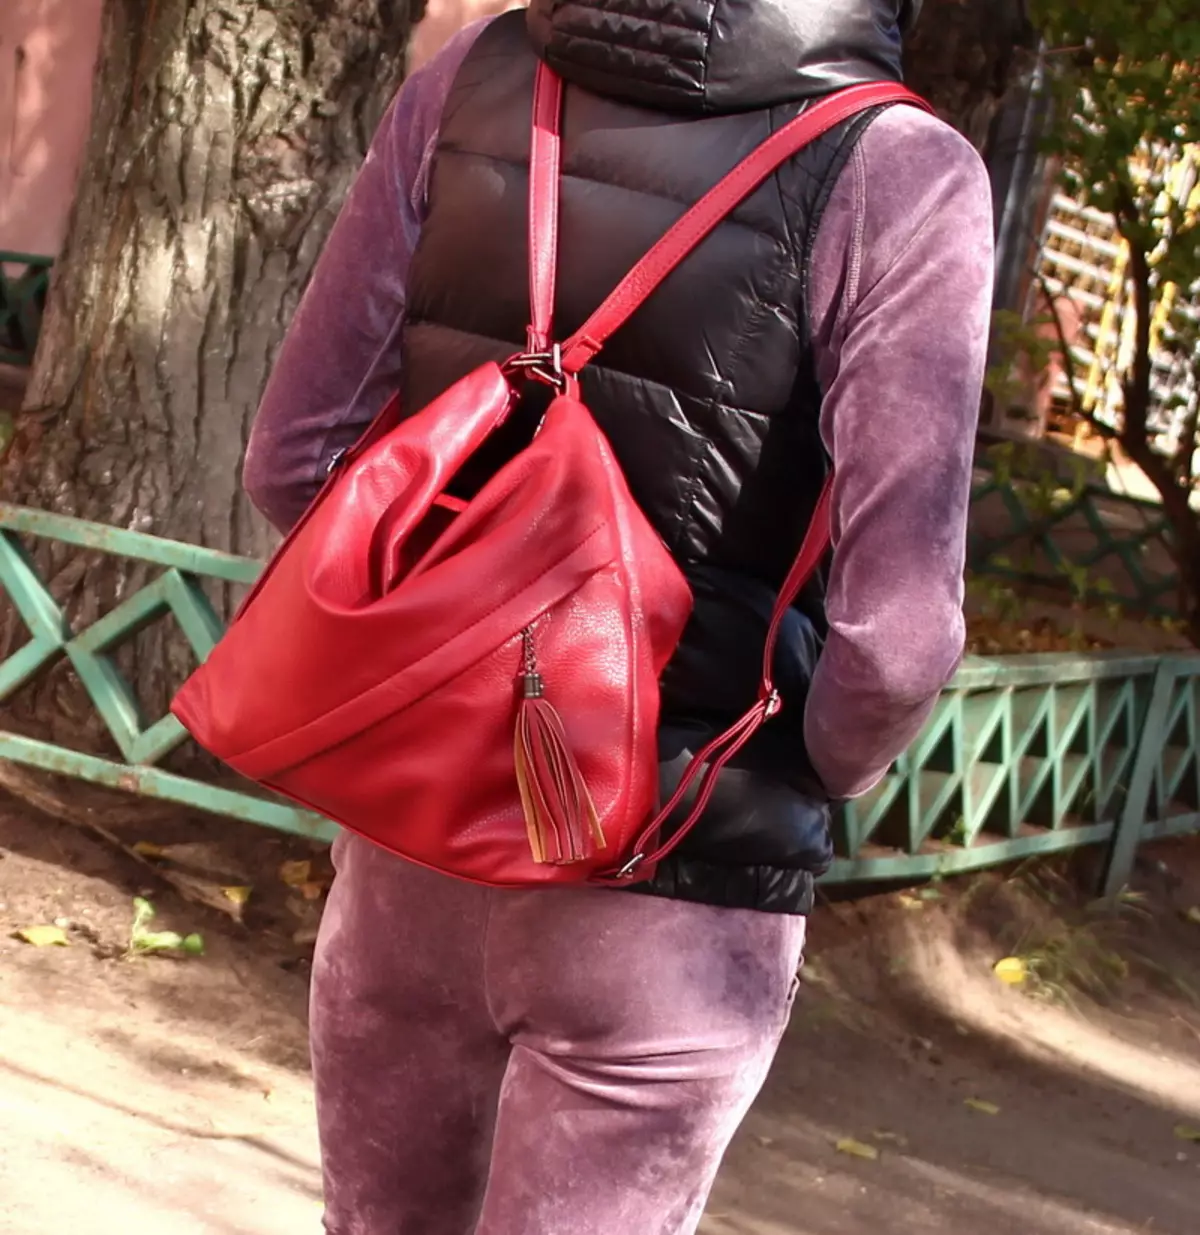 Transformers Backpacks: Ženske kožne vrećice s dvije ručke i eko-drvo, Burgundy i crna, urbana i cesta, drugi modeli 2589_27